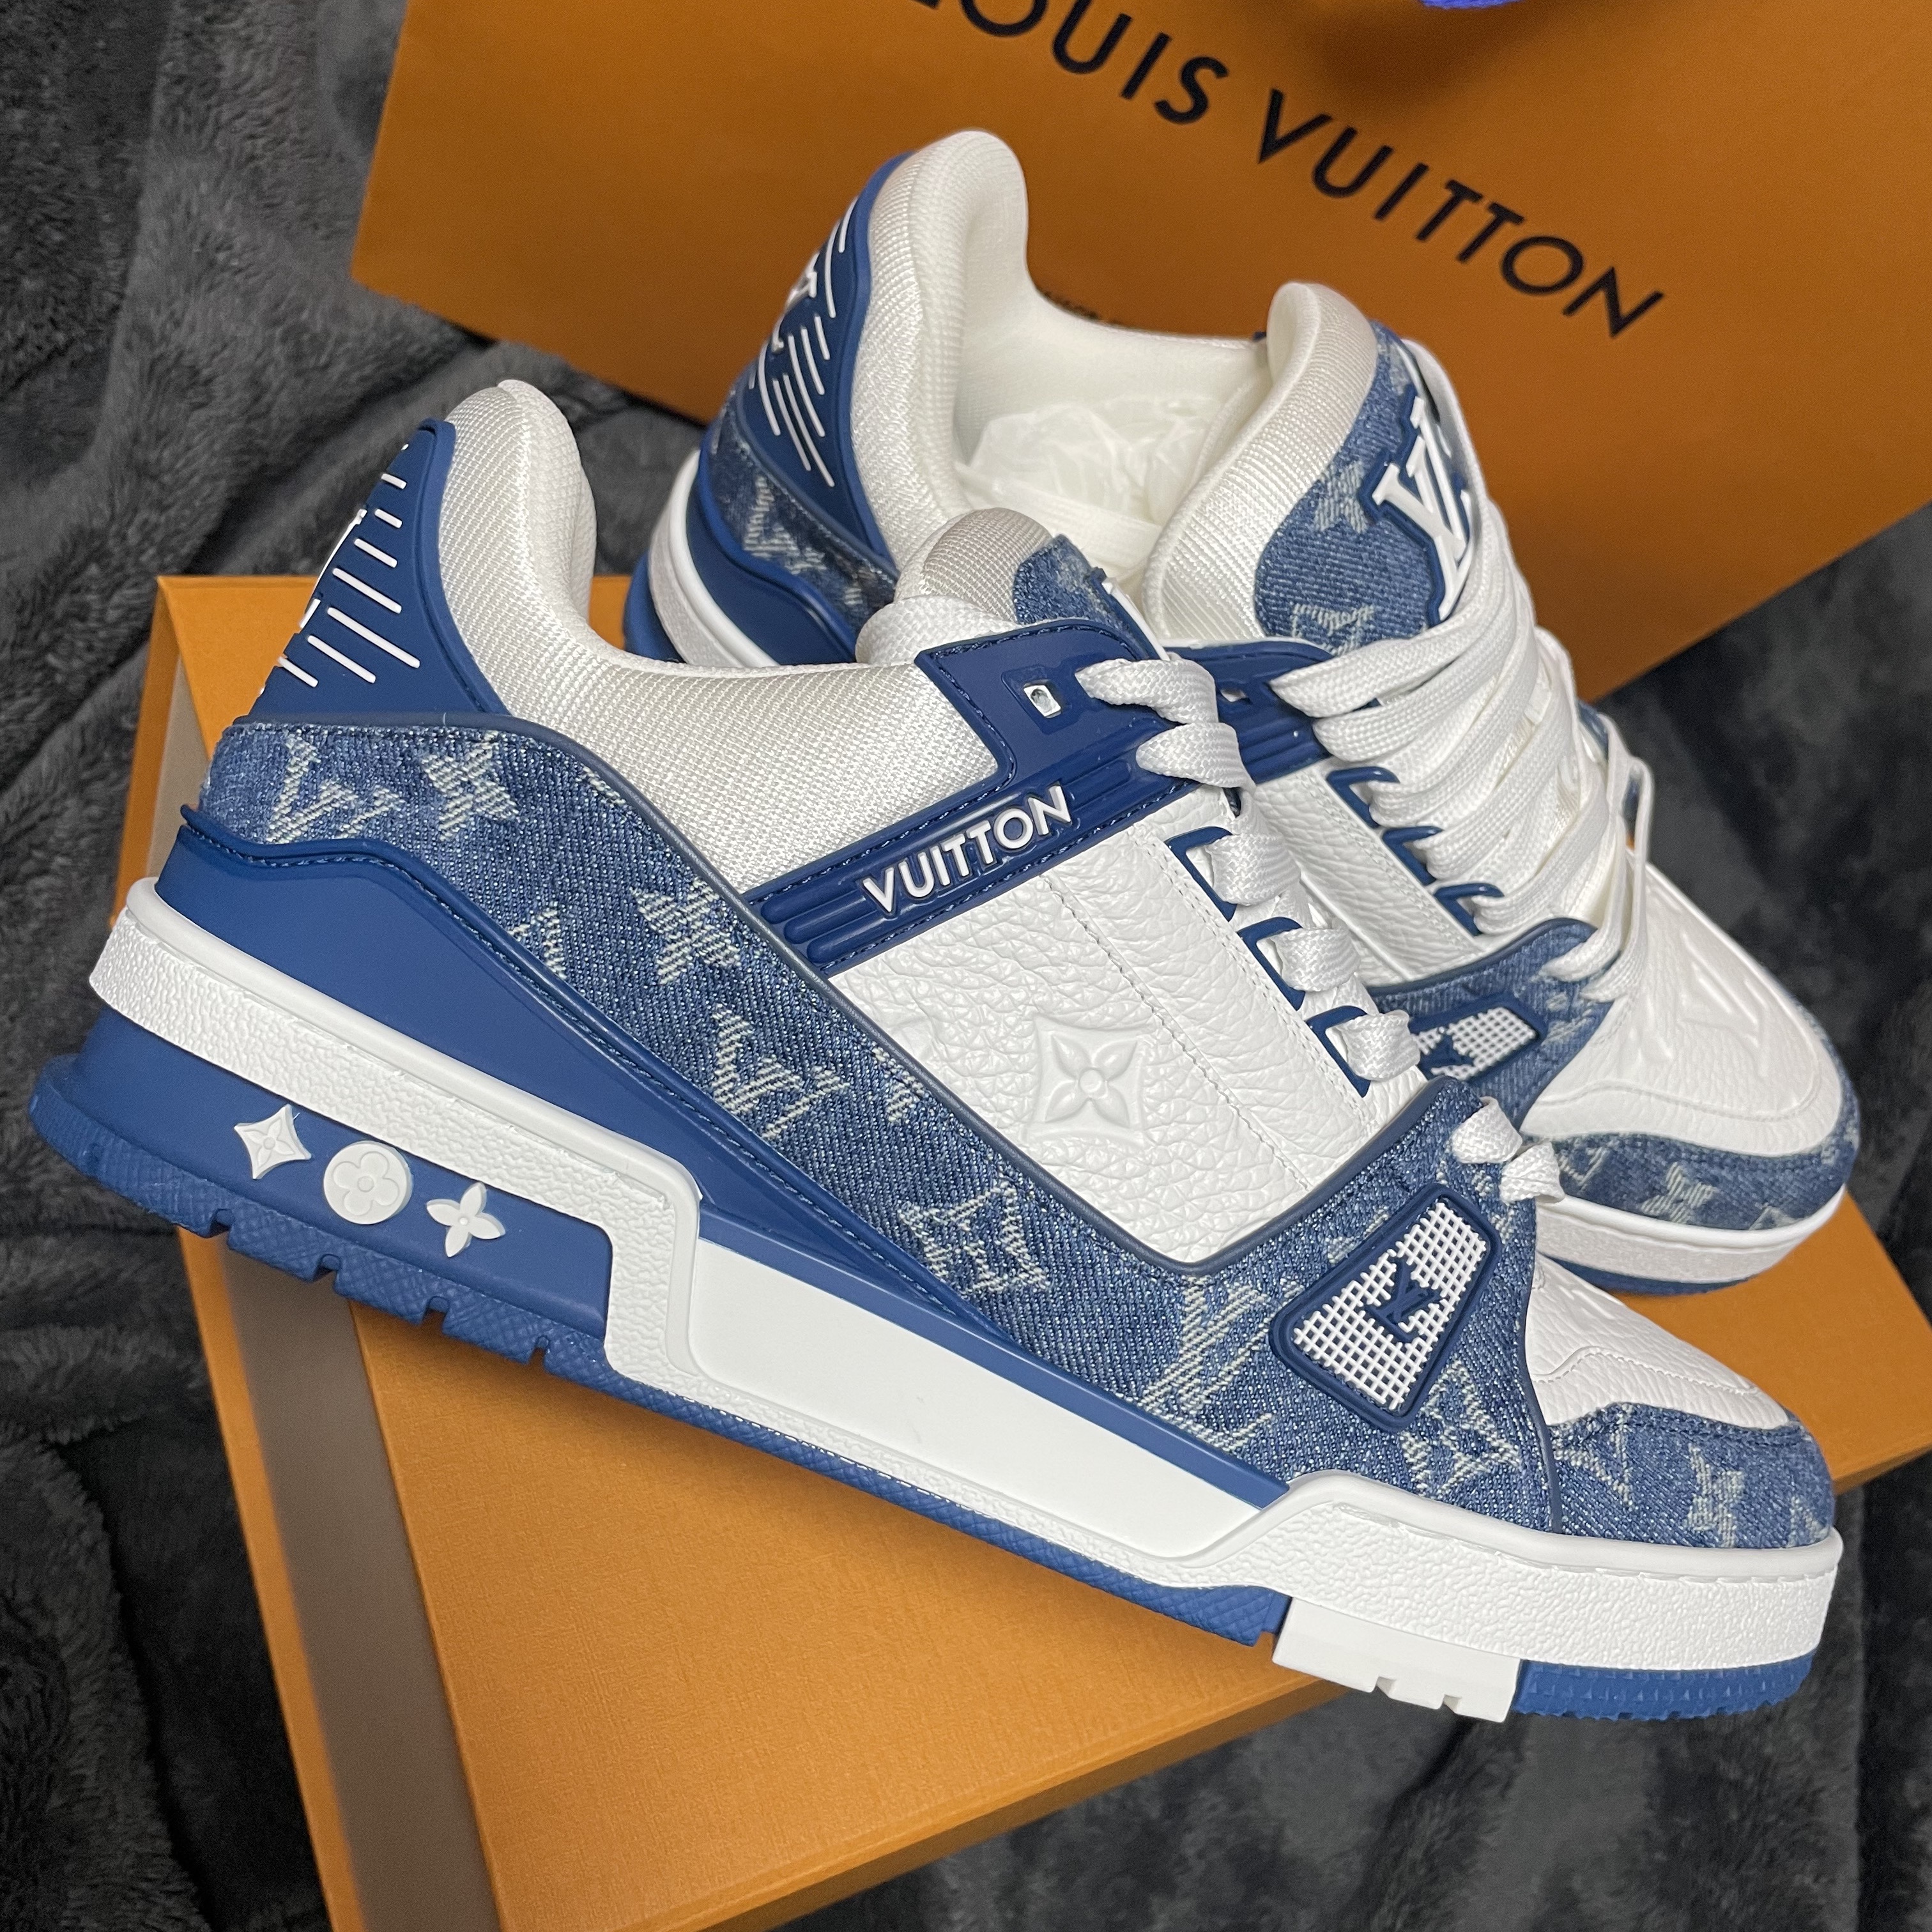 Louis Vuitton LV Trainer 1A8WAX #sneakers #louisvuitton #lv